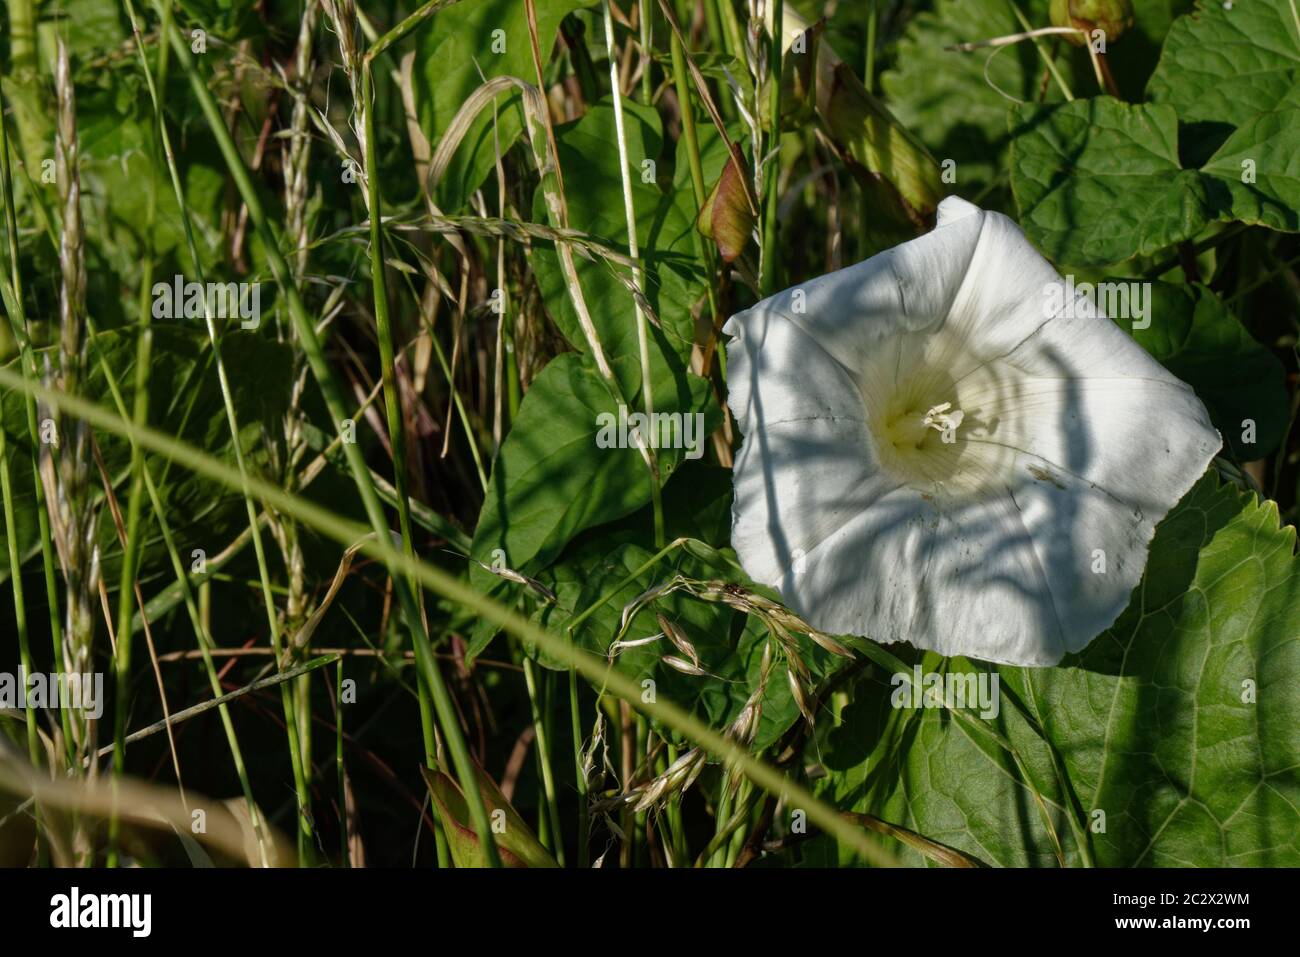 Hedge bineweed flower, typical UK 'weed' Stock Photo